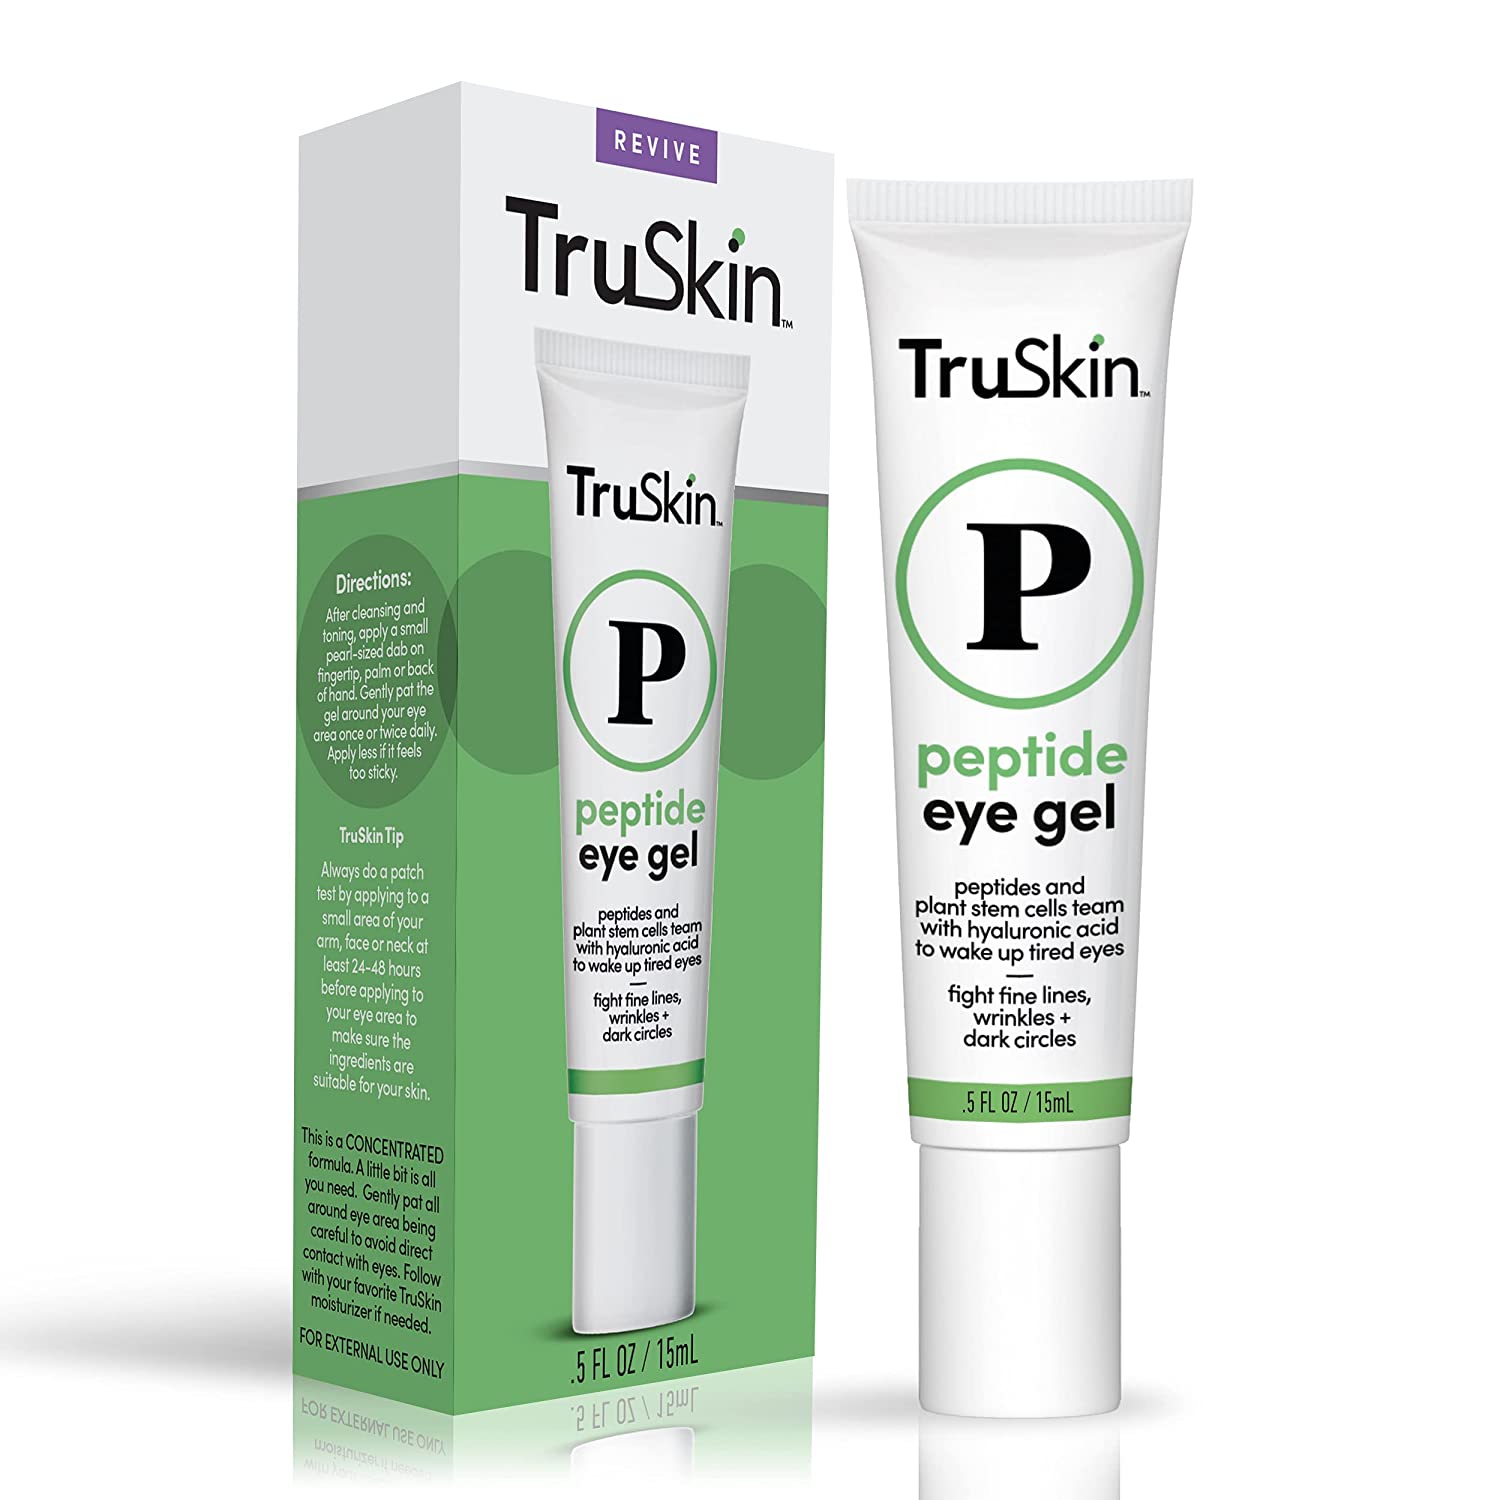 TruSkin Peptide Eye Gel with Hyaluronic Acid and Vitamin E - 0.5oz (15ml)